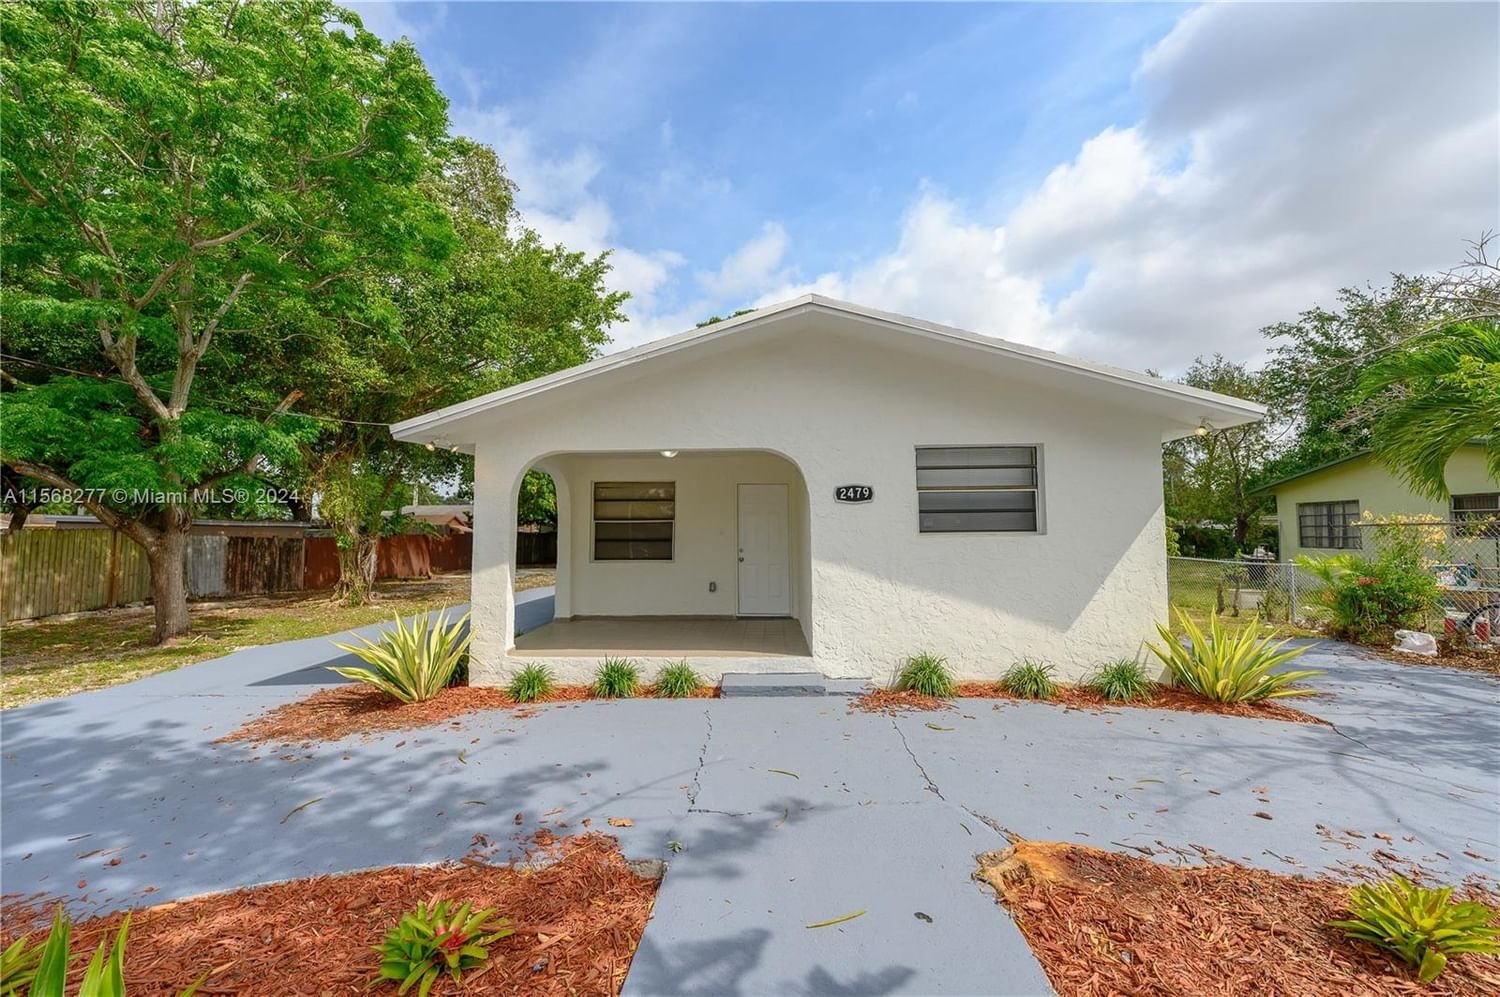 Real estate property located at 2479 93rd St, Miami-Dade County, GULFAIR ESTATES, Miami, FL